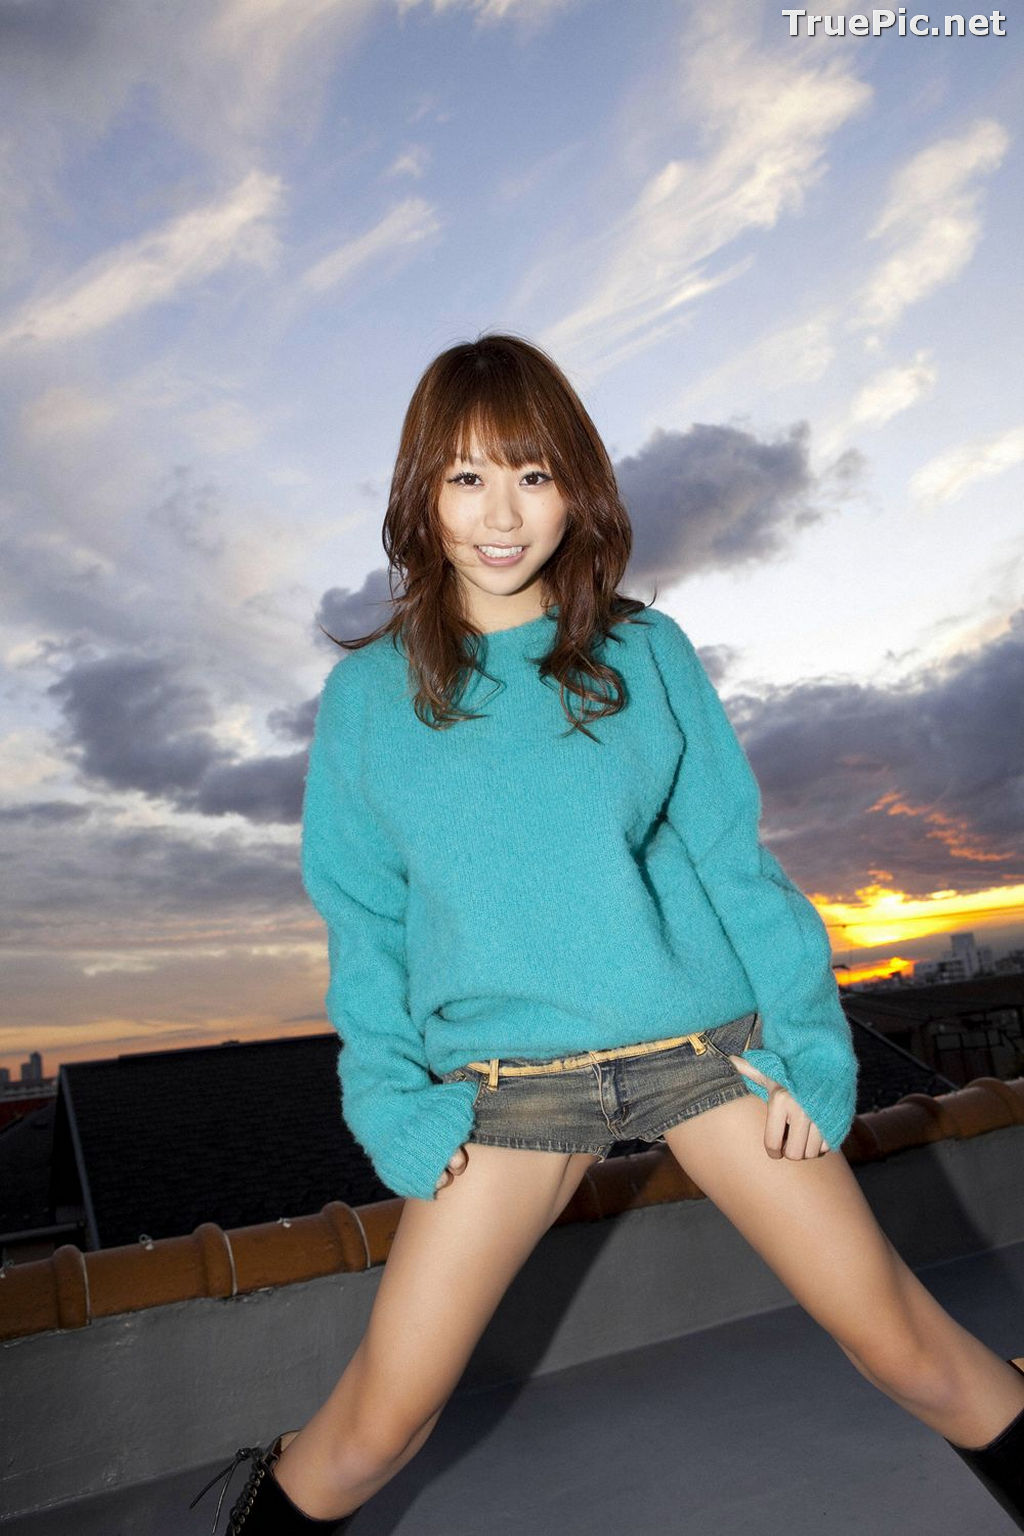 Image [YS Web] Vol.356 - Japanese Gravure Idol and Actress - Mai Nishida - TruePic.net - Picture-58